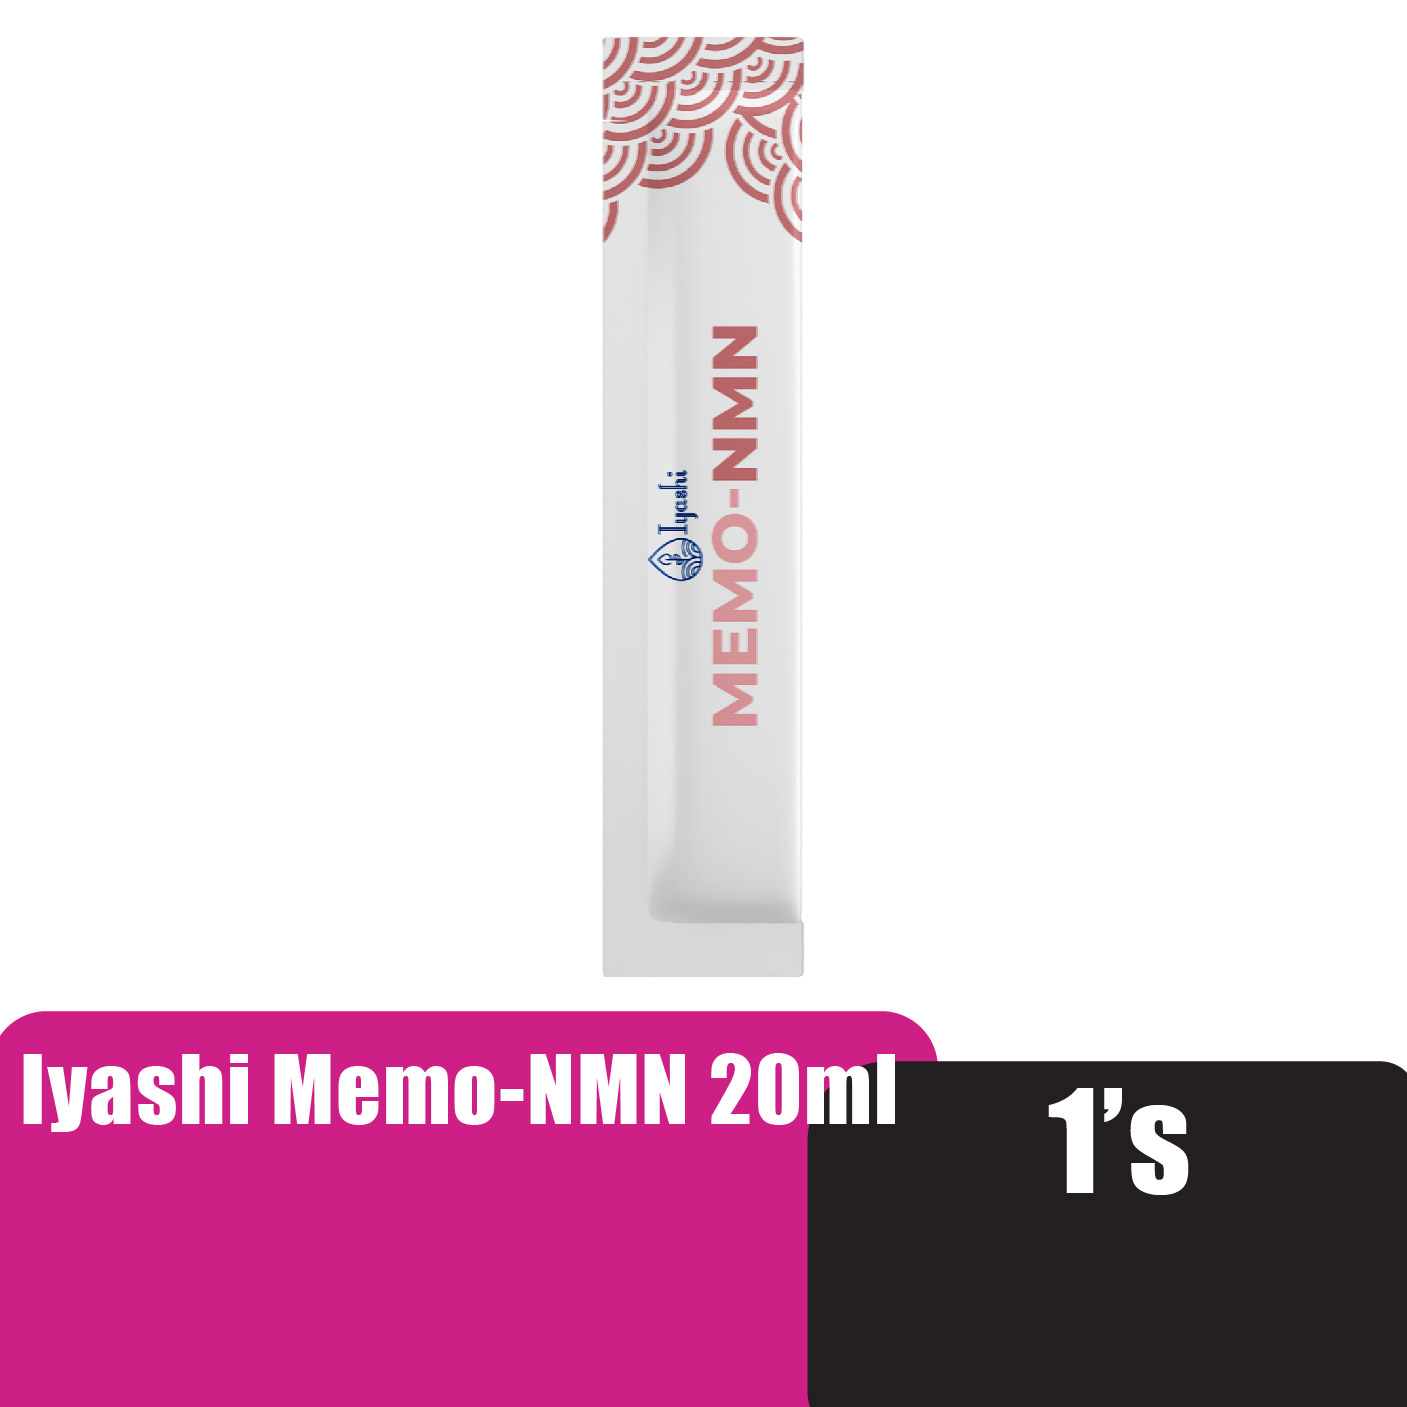 IYASHI Memo nmn Collagen Drink to promote Anti Aging ( Nmn Supplement / Collagen Supplement / Collegen ) 20ml x 1's